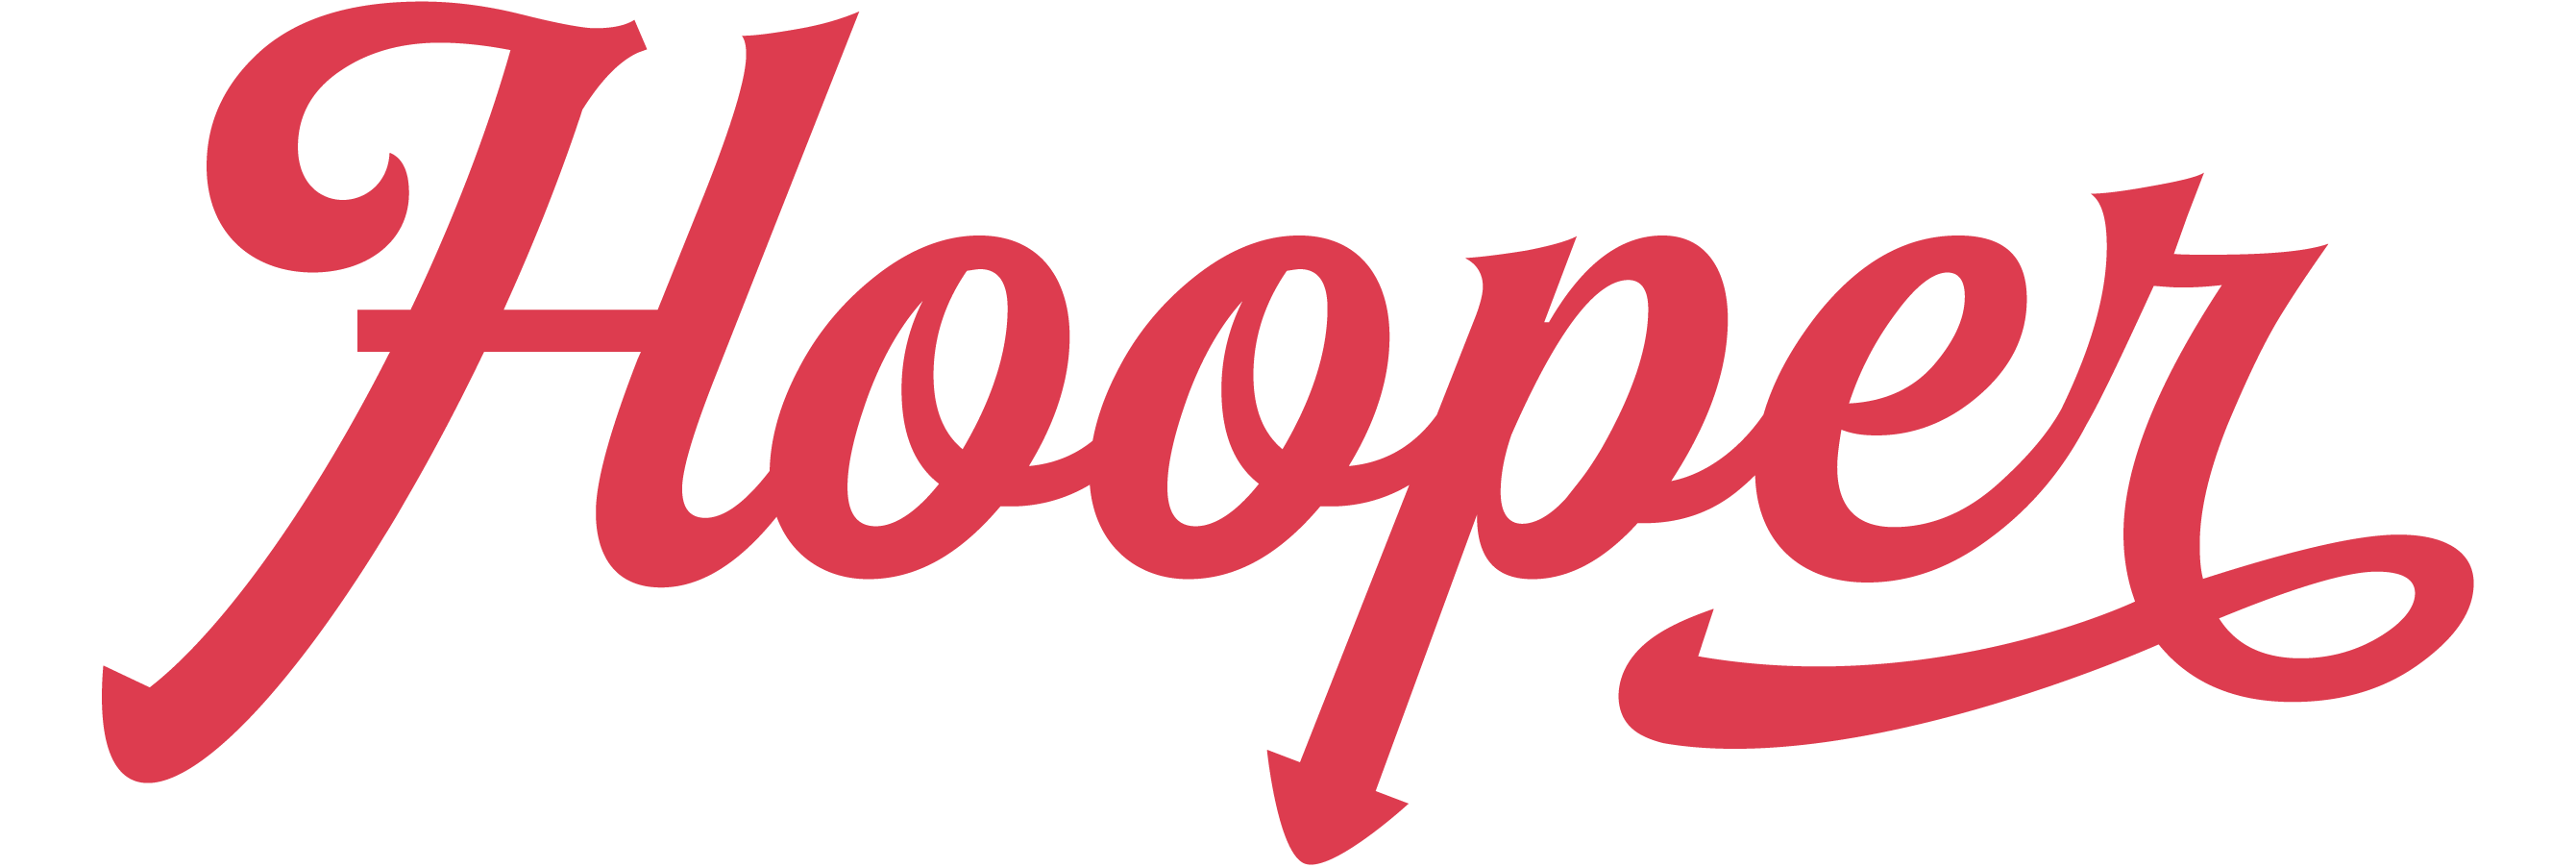 Hooper Store